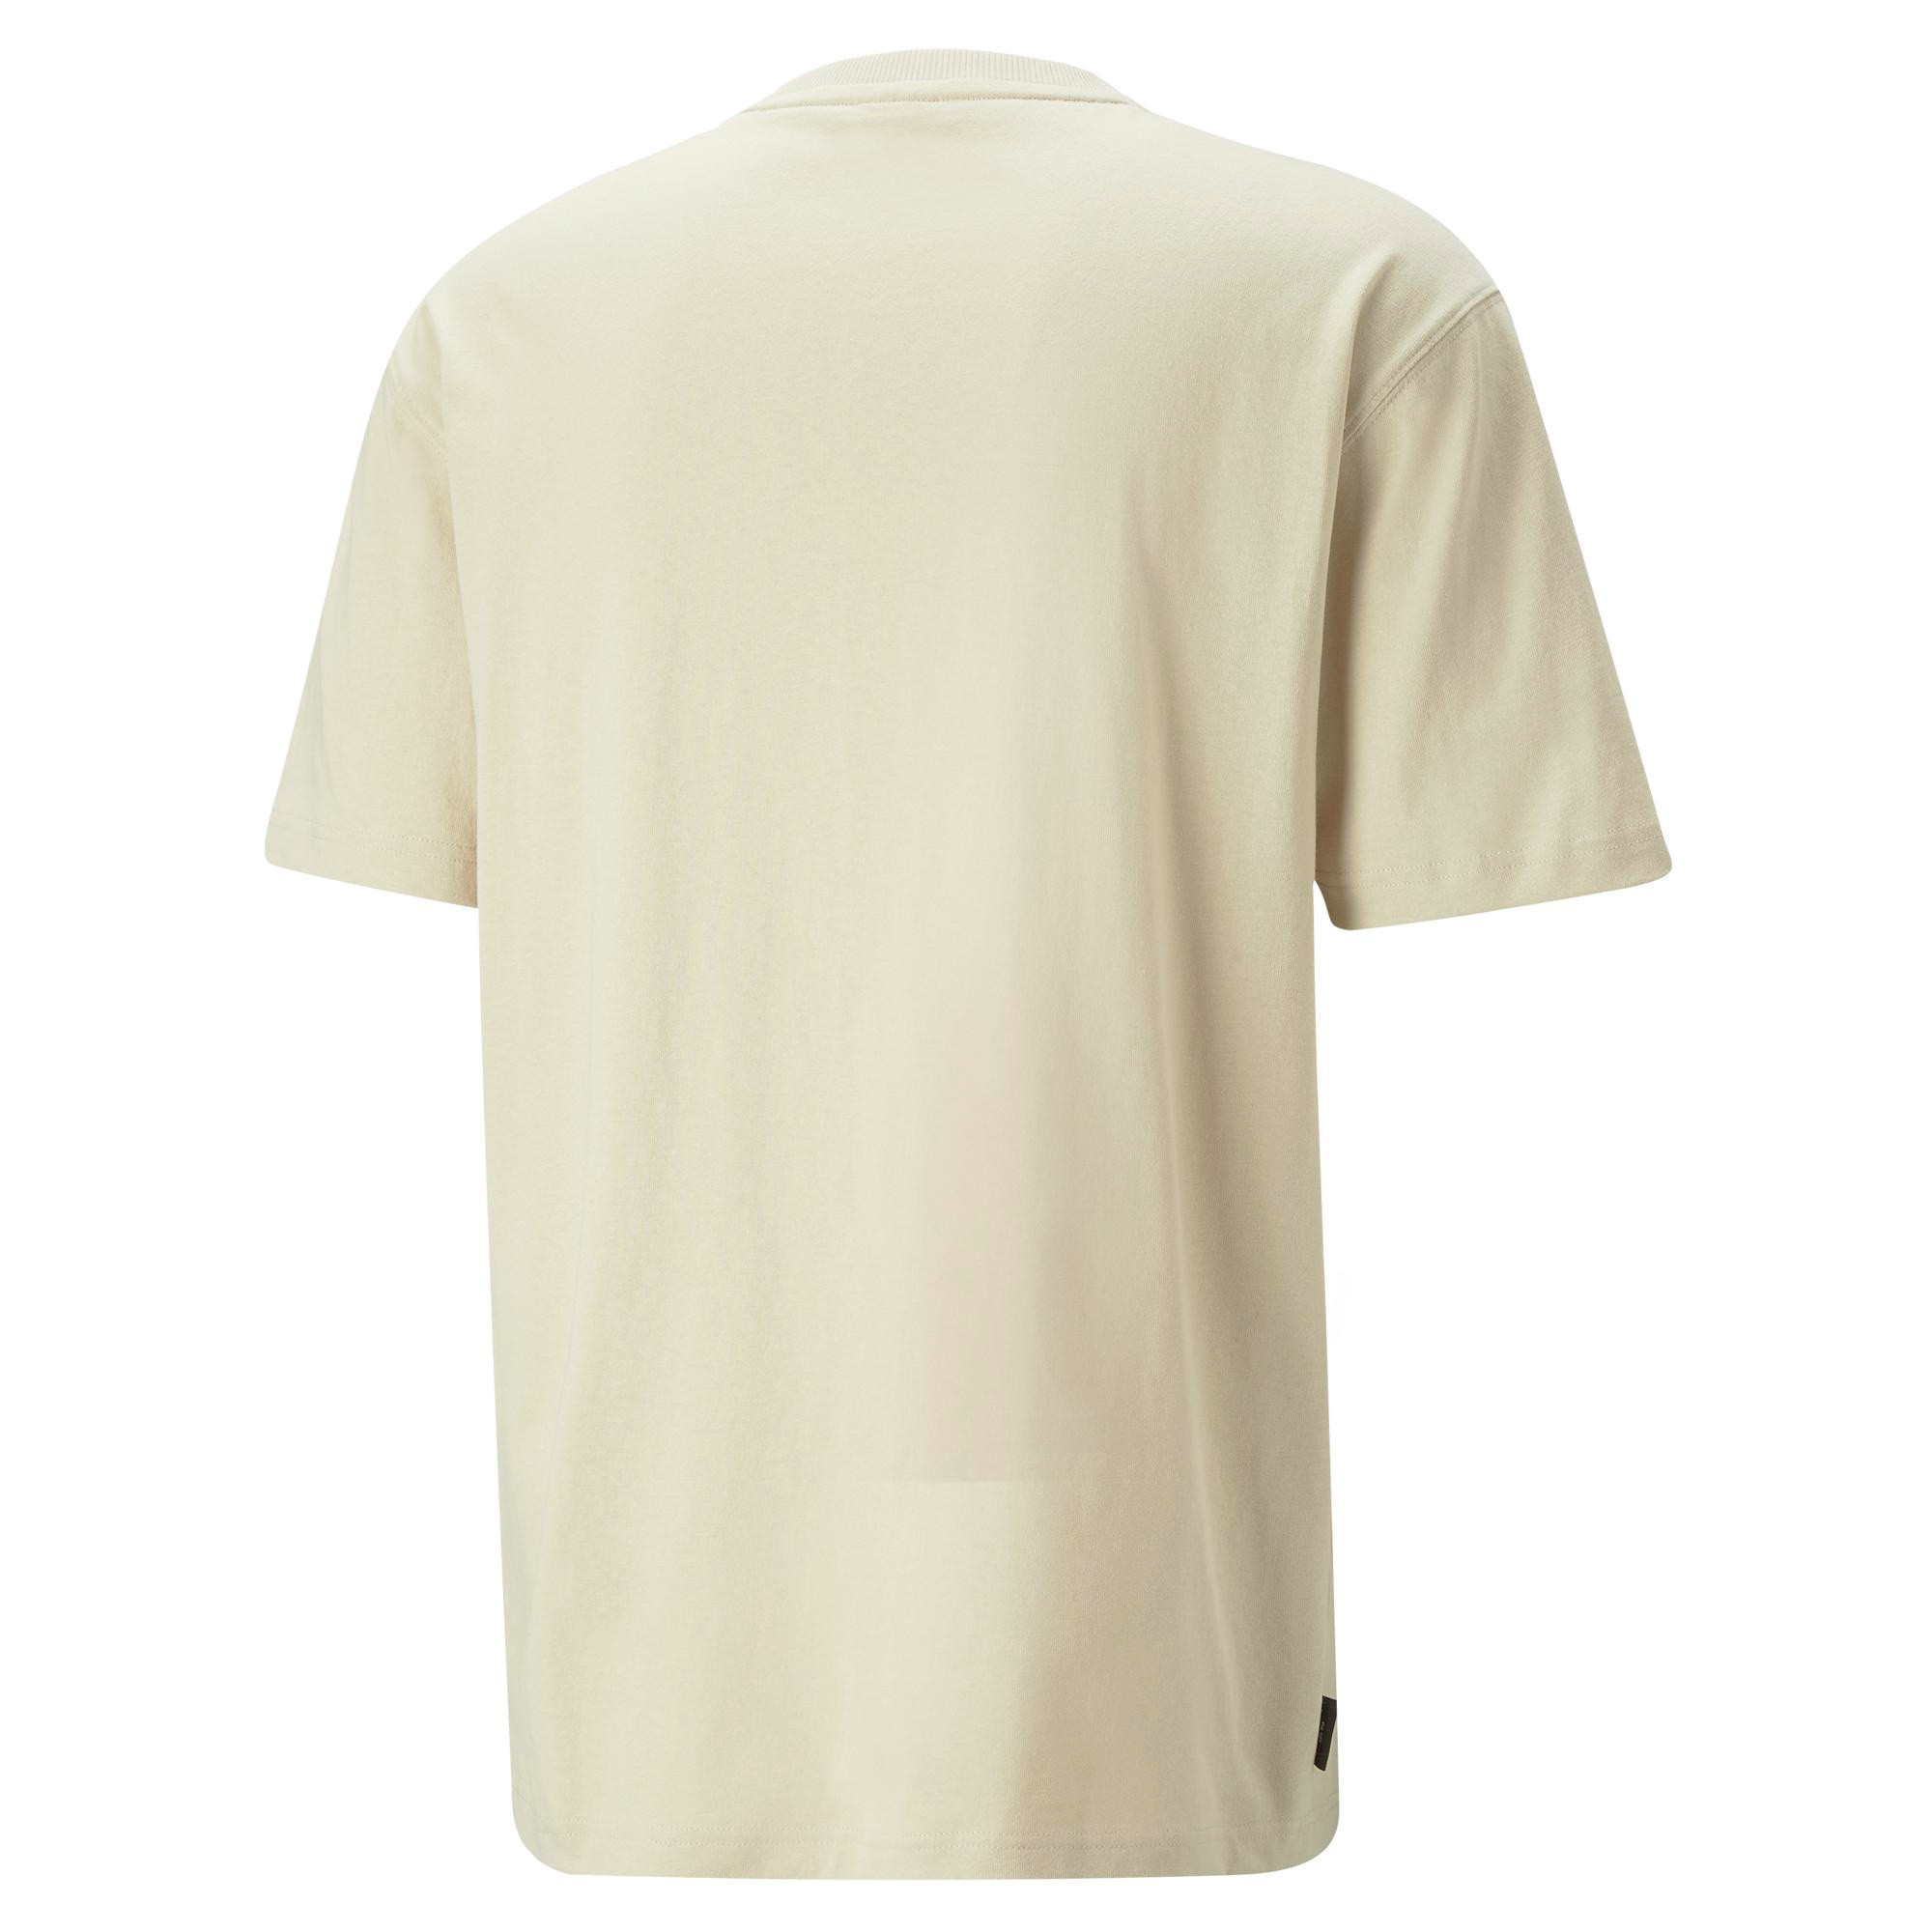 Puma - Cotton T-shirt with logo, Light Beige, large image number 1